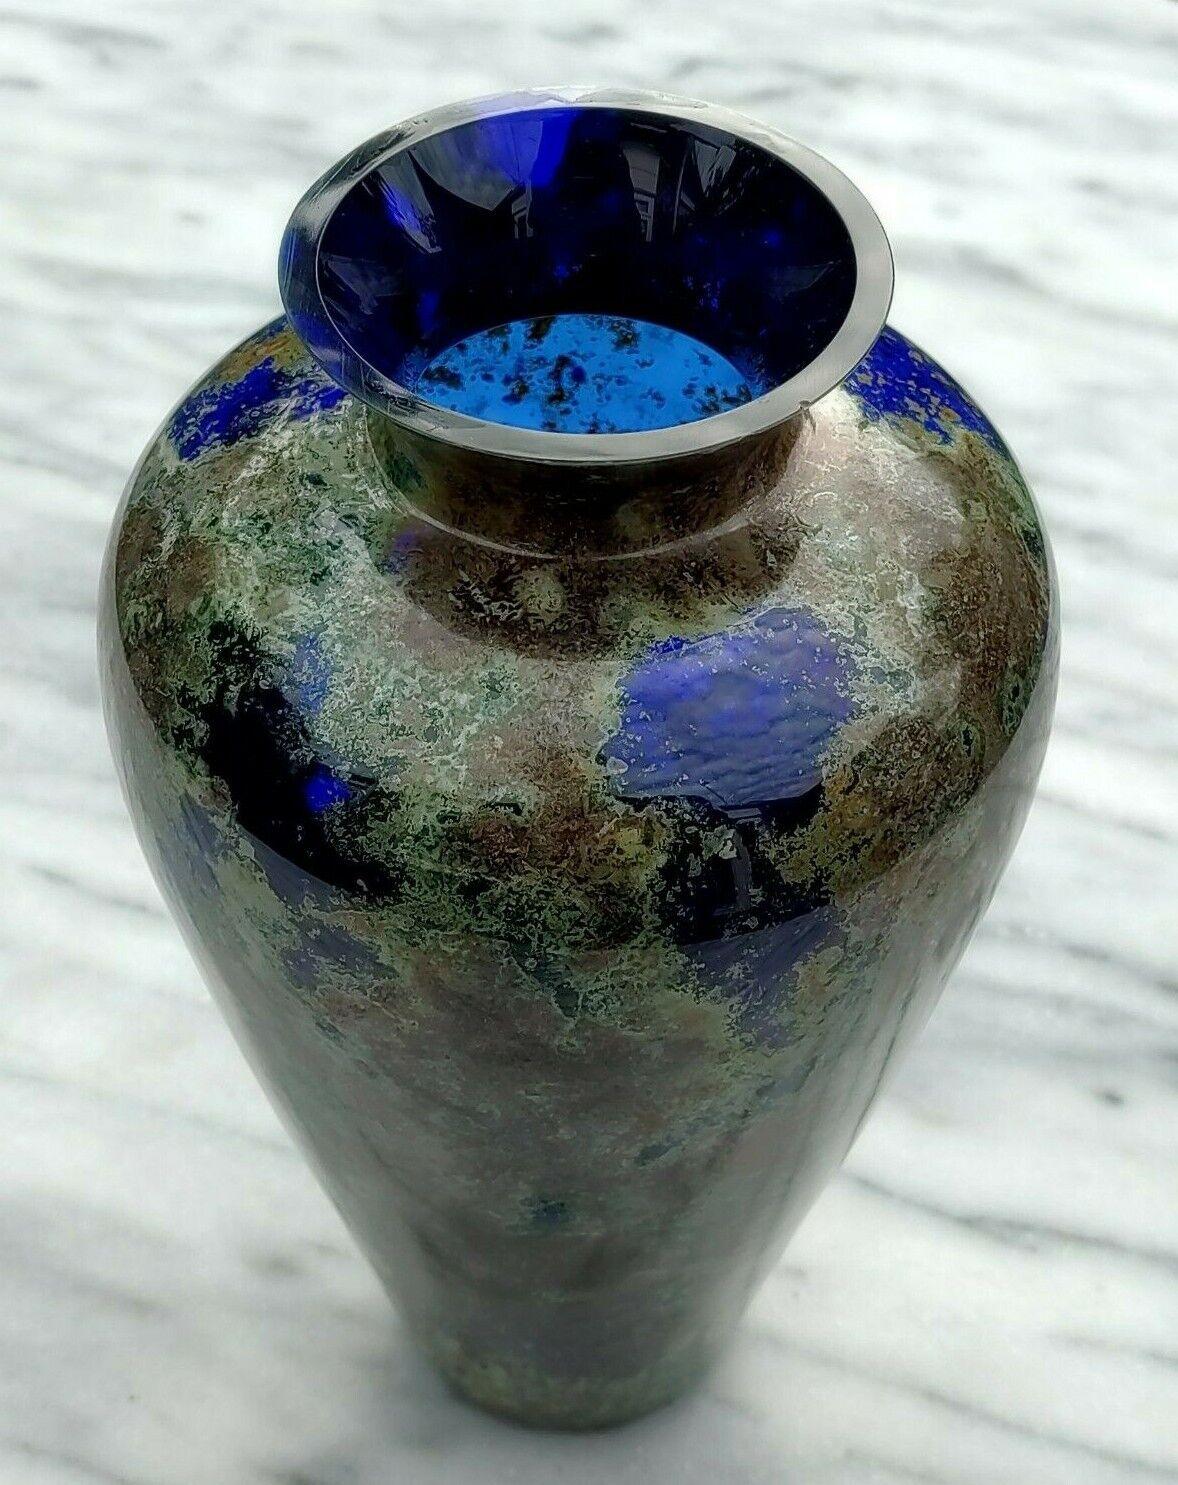 Josef Painted Vase - Cobalt Blue